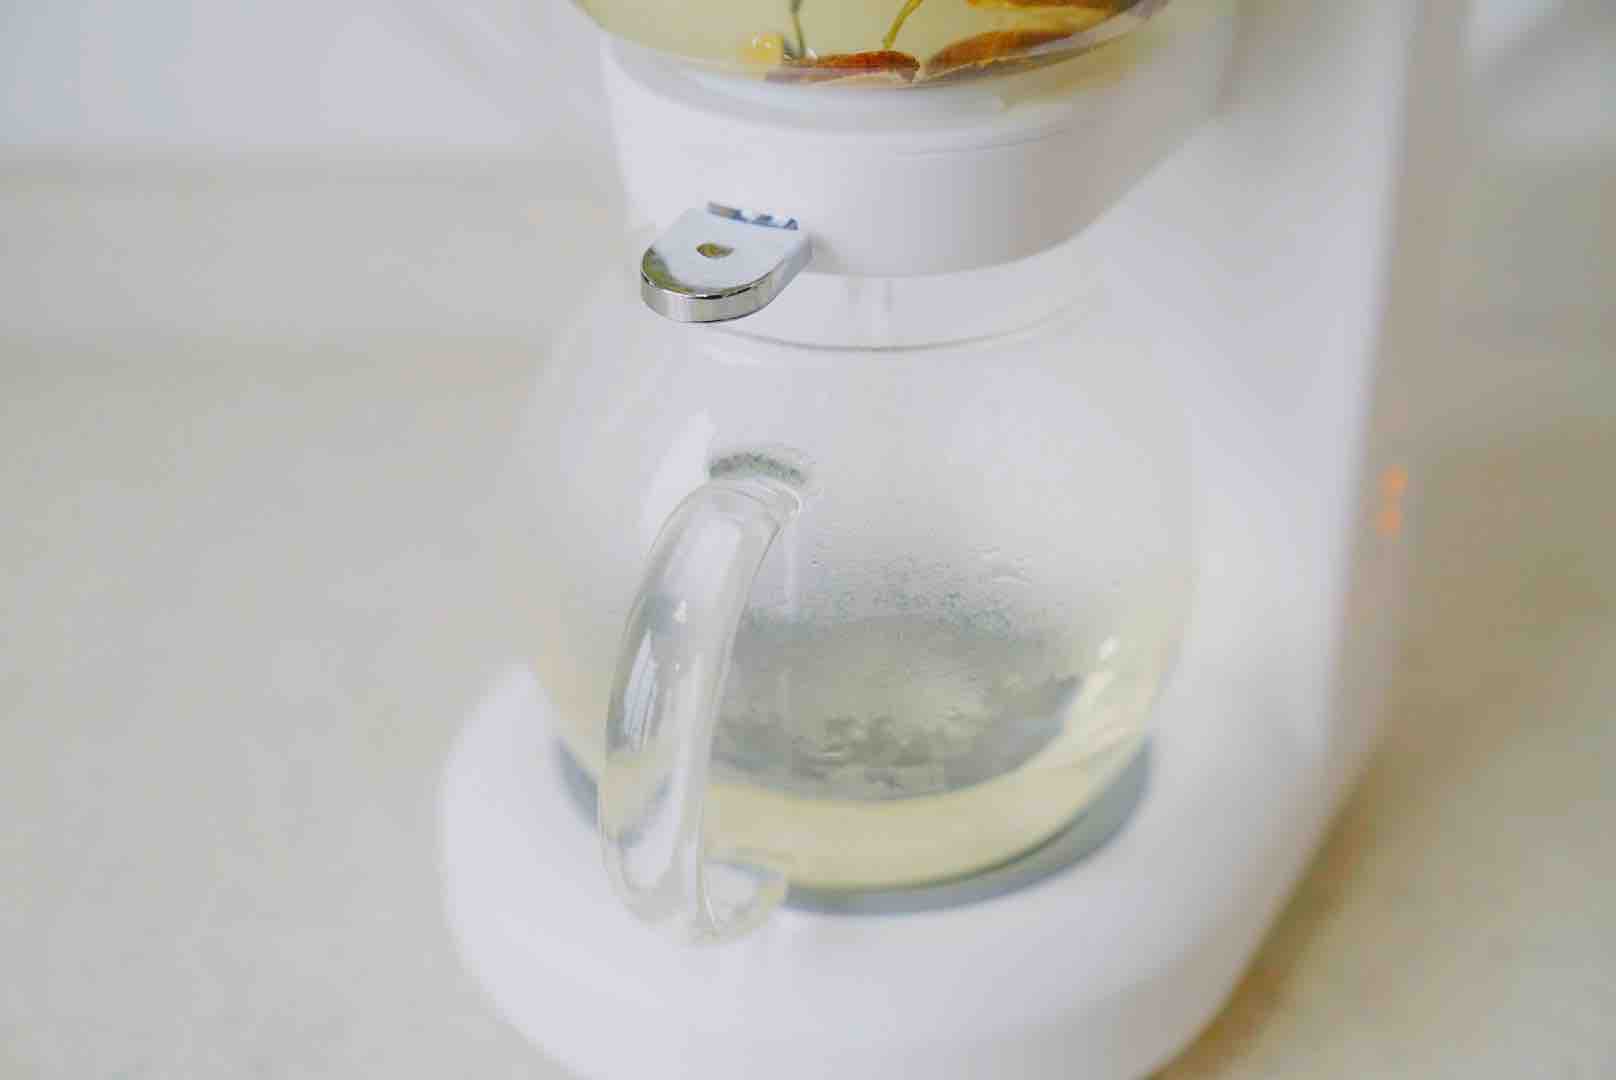 Honeysuckle Licorice Tea recipe